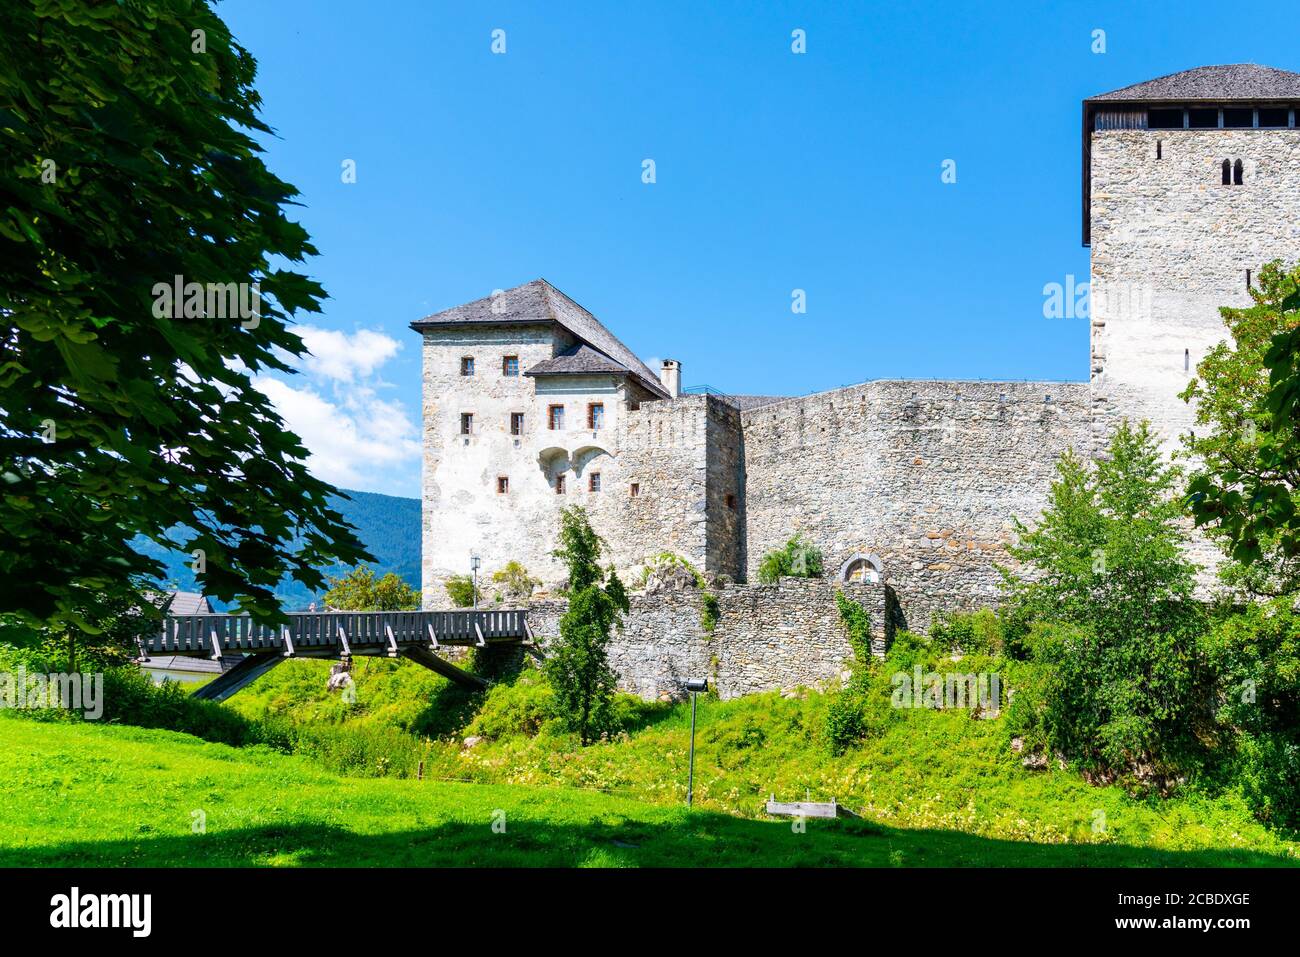 Kaprun Castle - medieaval fortress built in the 12th century, Kaprun, Austria. Stock Photo